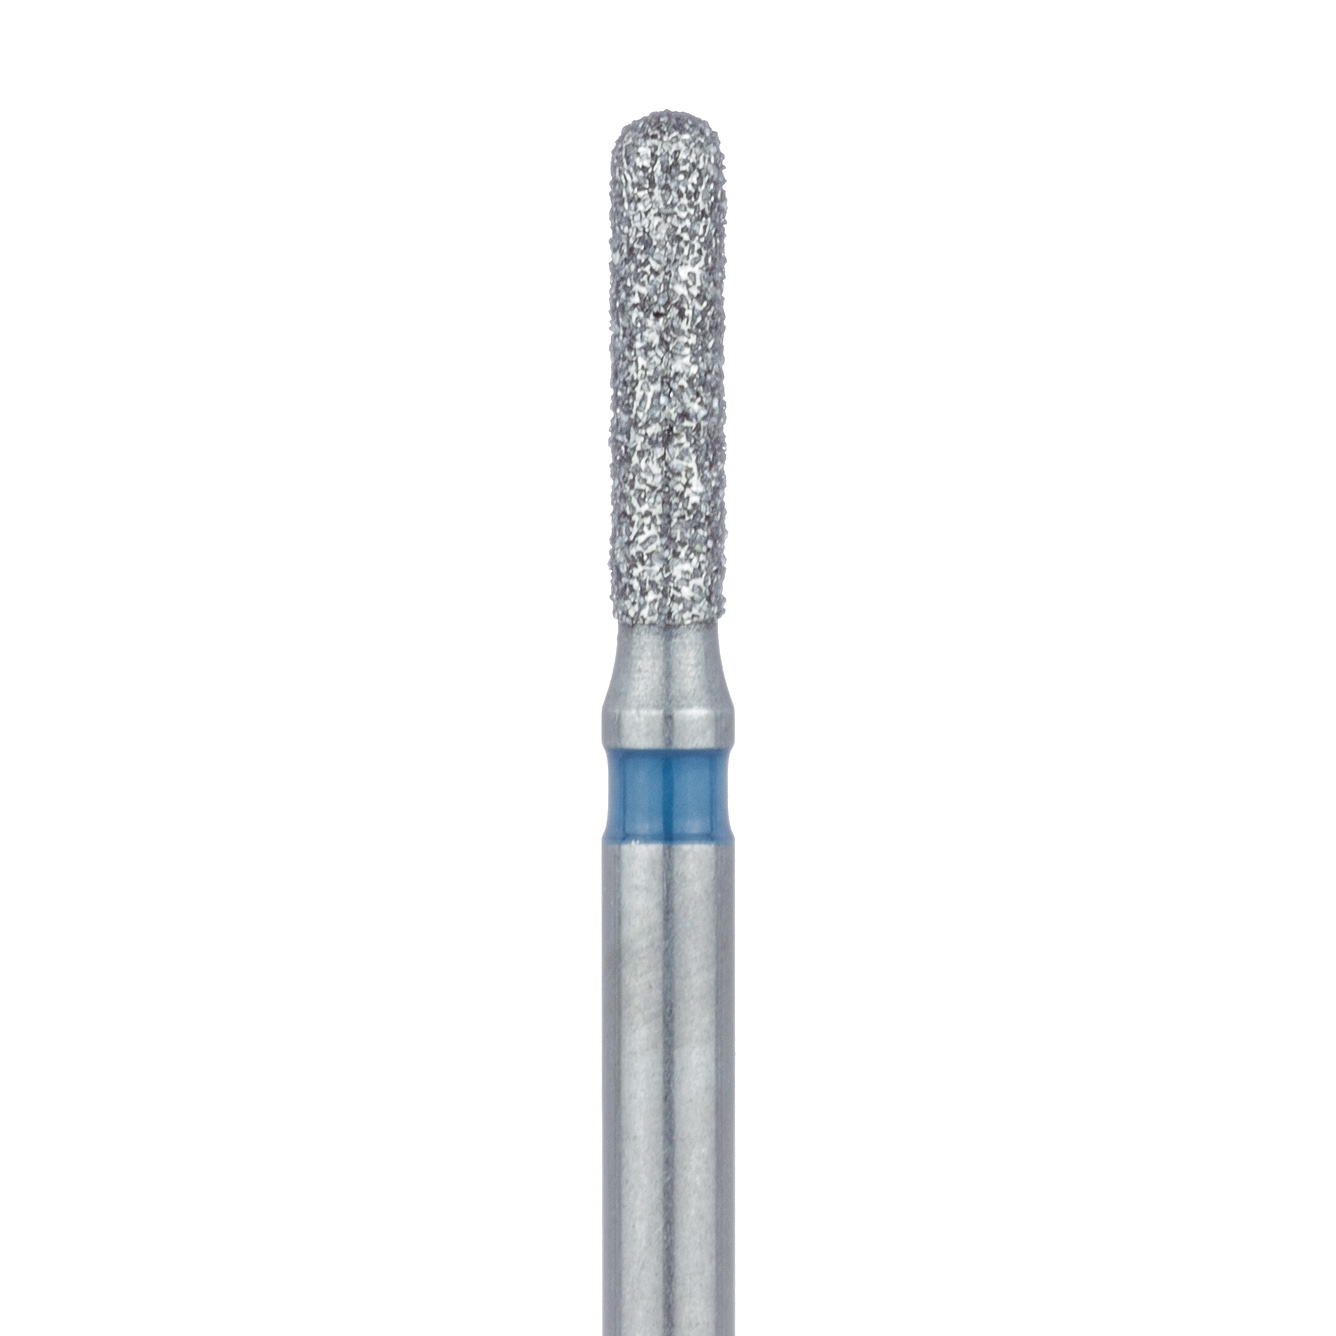 838L-014-FG Long Round End Cylinder Diamond Bur, 1.4mm Ø, Medium, FG